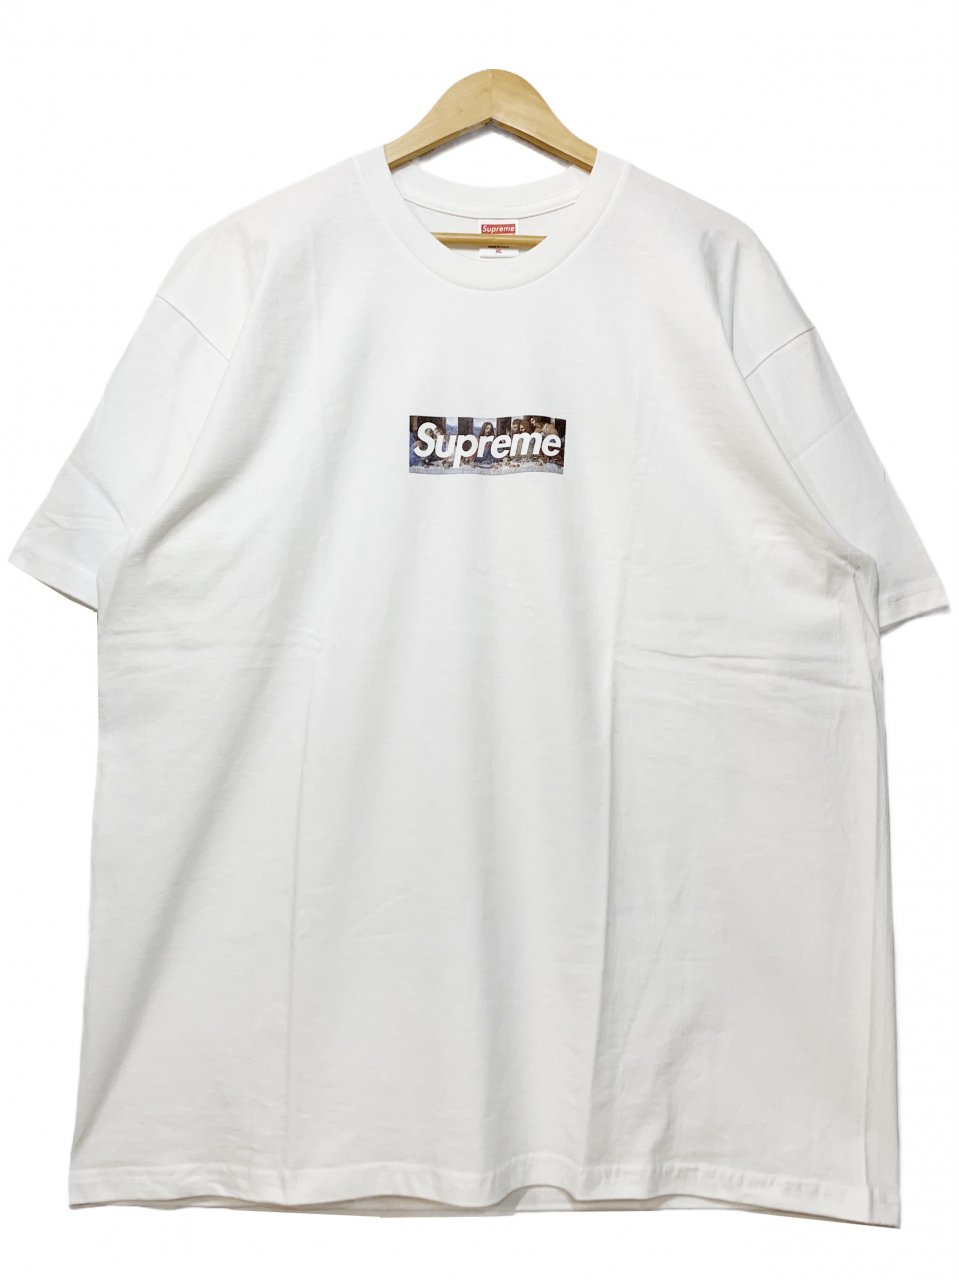 WhiteサイズSupreme Box Logo Tee XL ボックス ロゴ 白 - Tシャツ ...